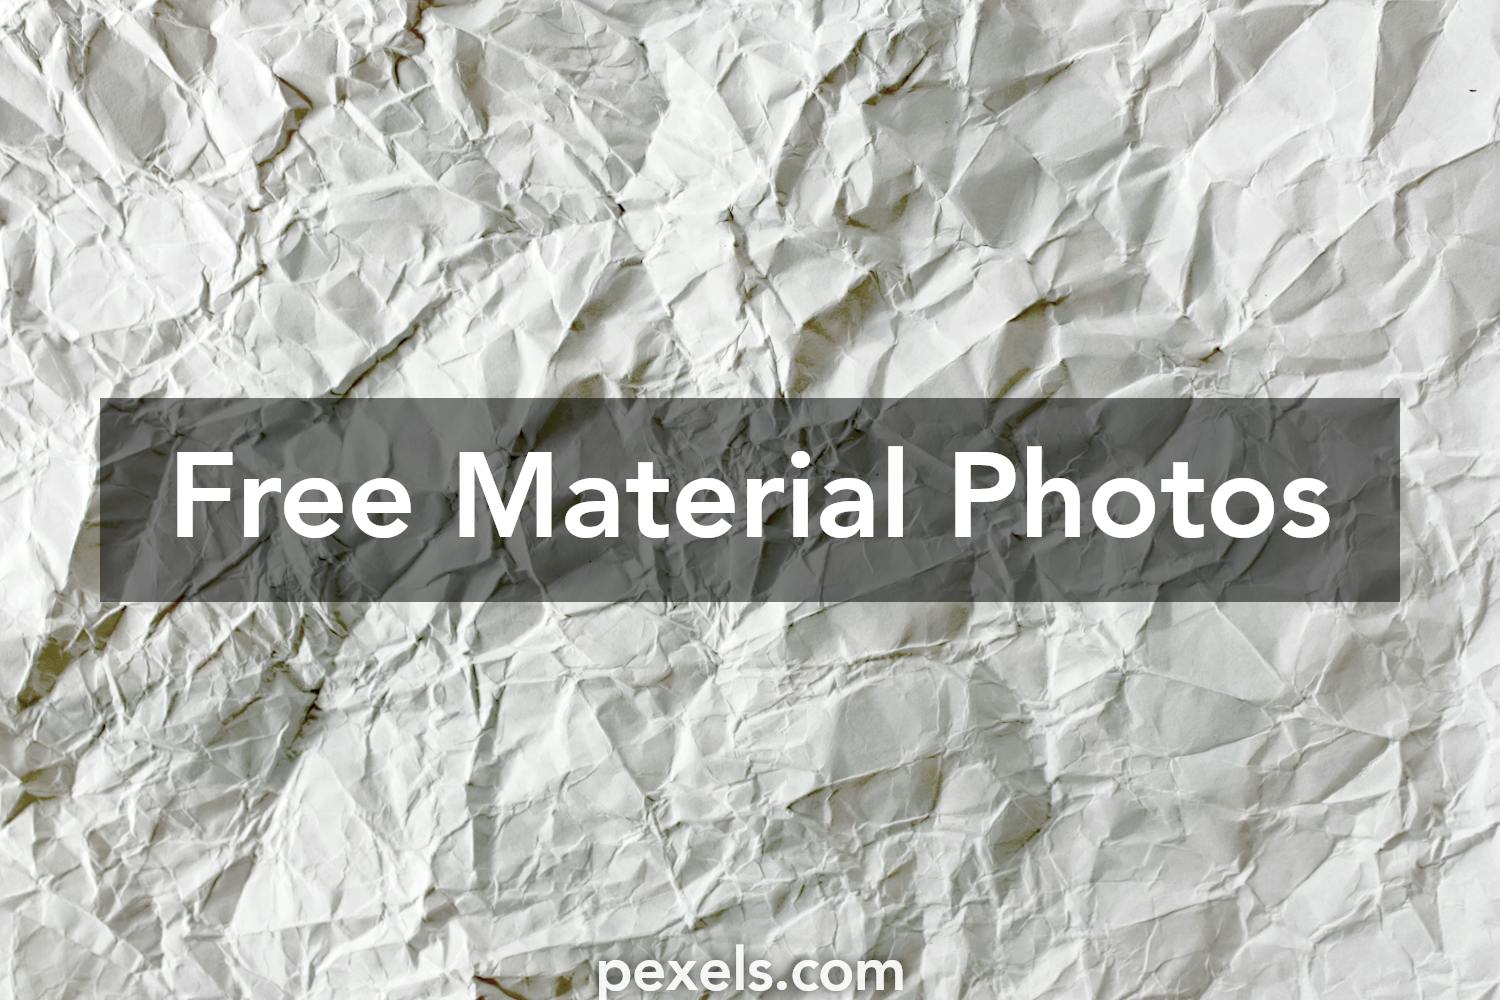 Free stock photos of material Â· Pexels